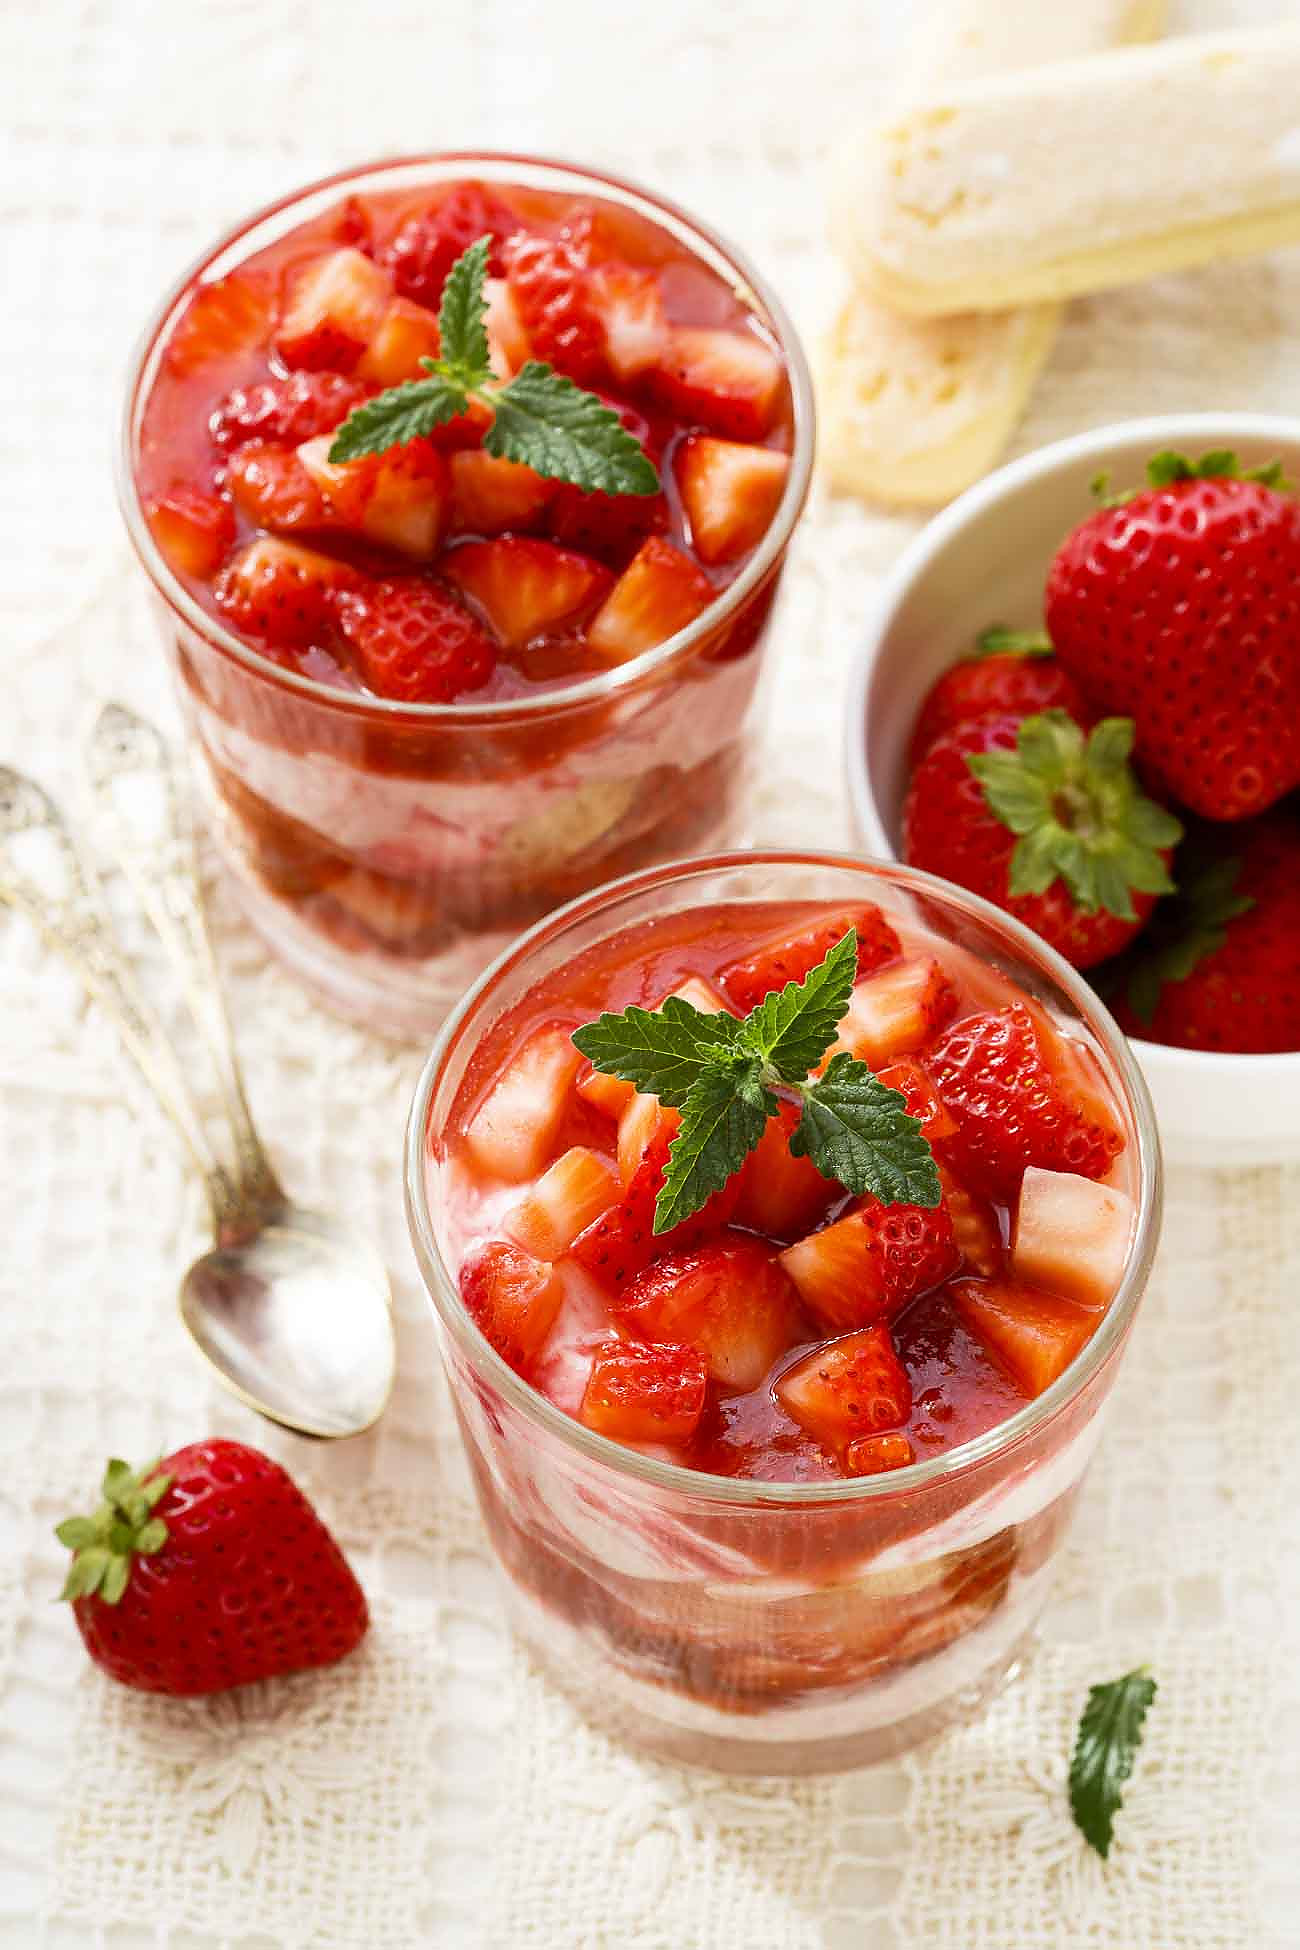 Strawberry Trifle Recipe With Grand Marnier